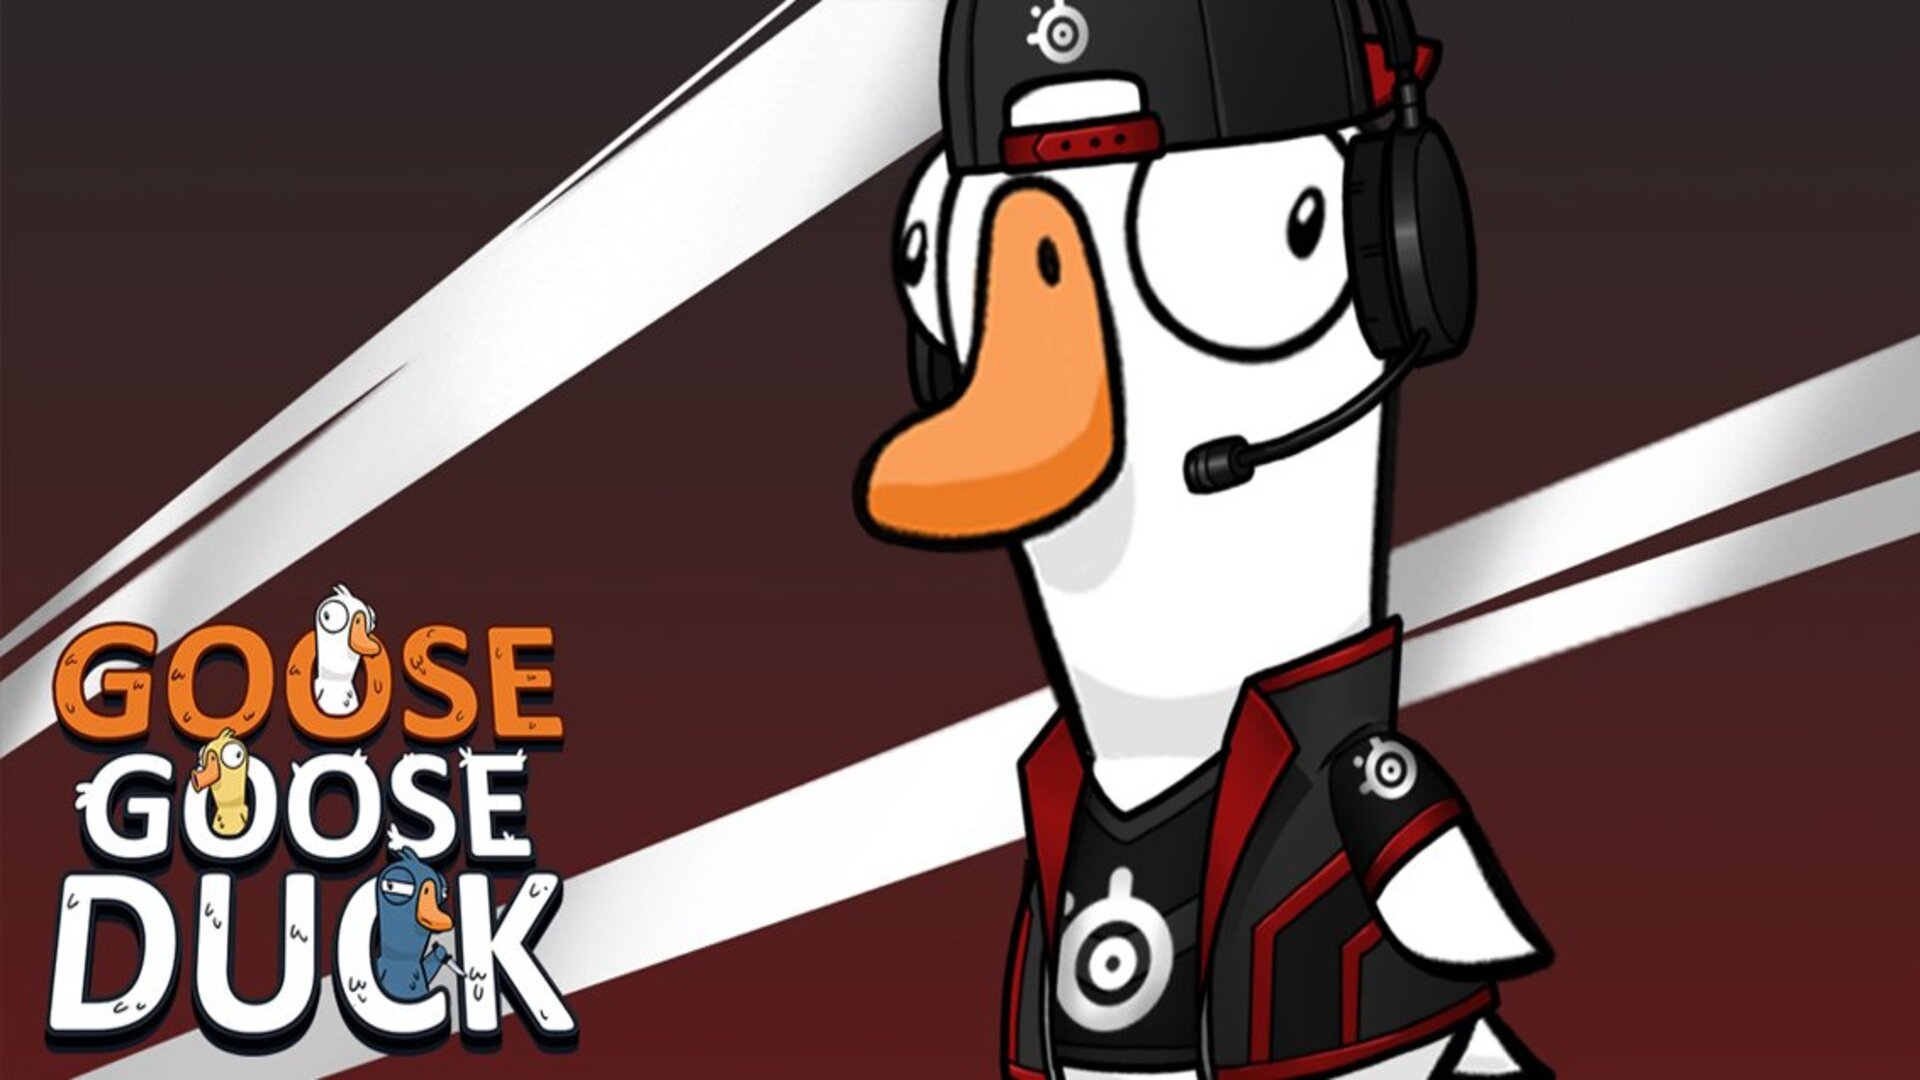 Goose Goose Duck - Steelseries Outfit Pack Digital Download CD Key, 3.79 usd